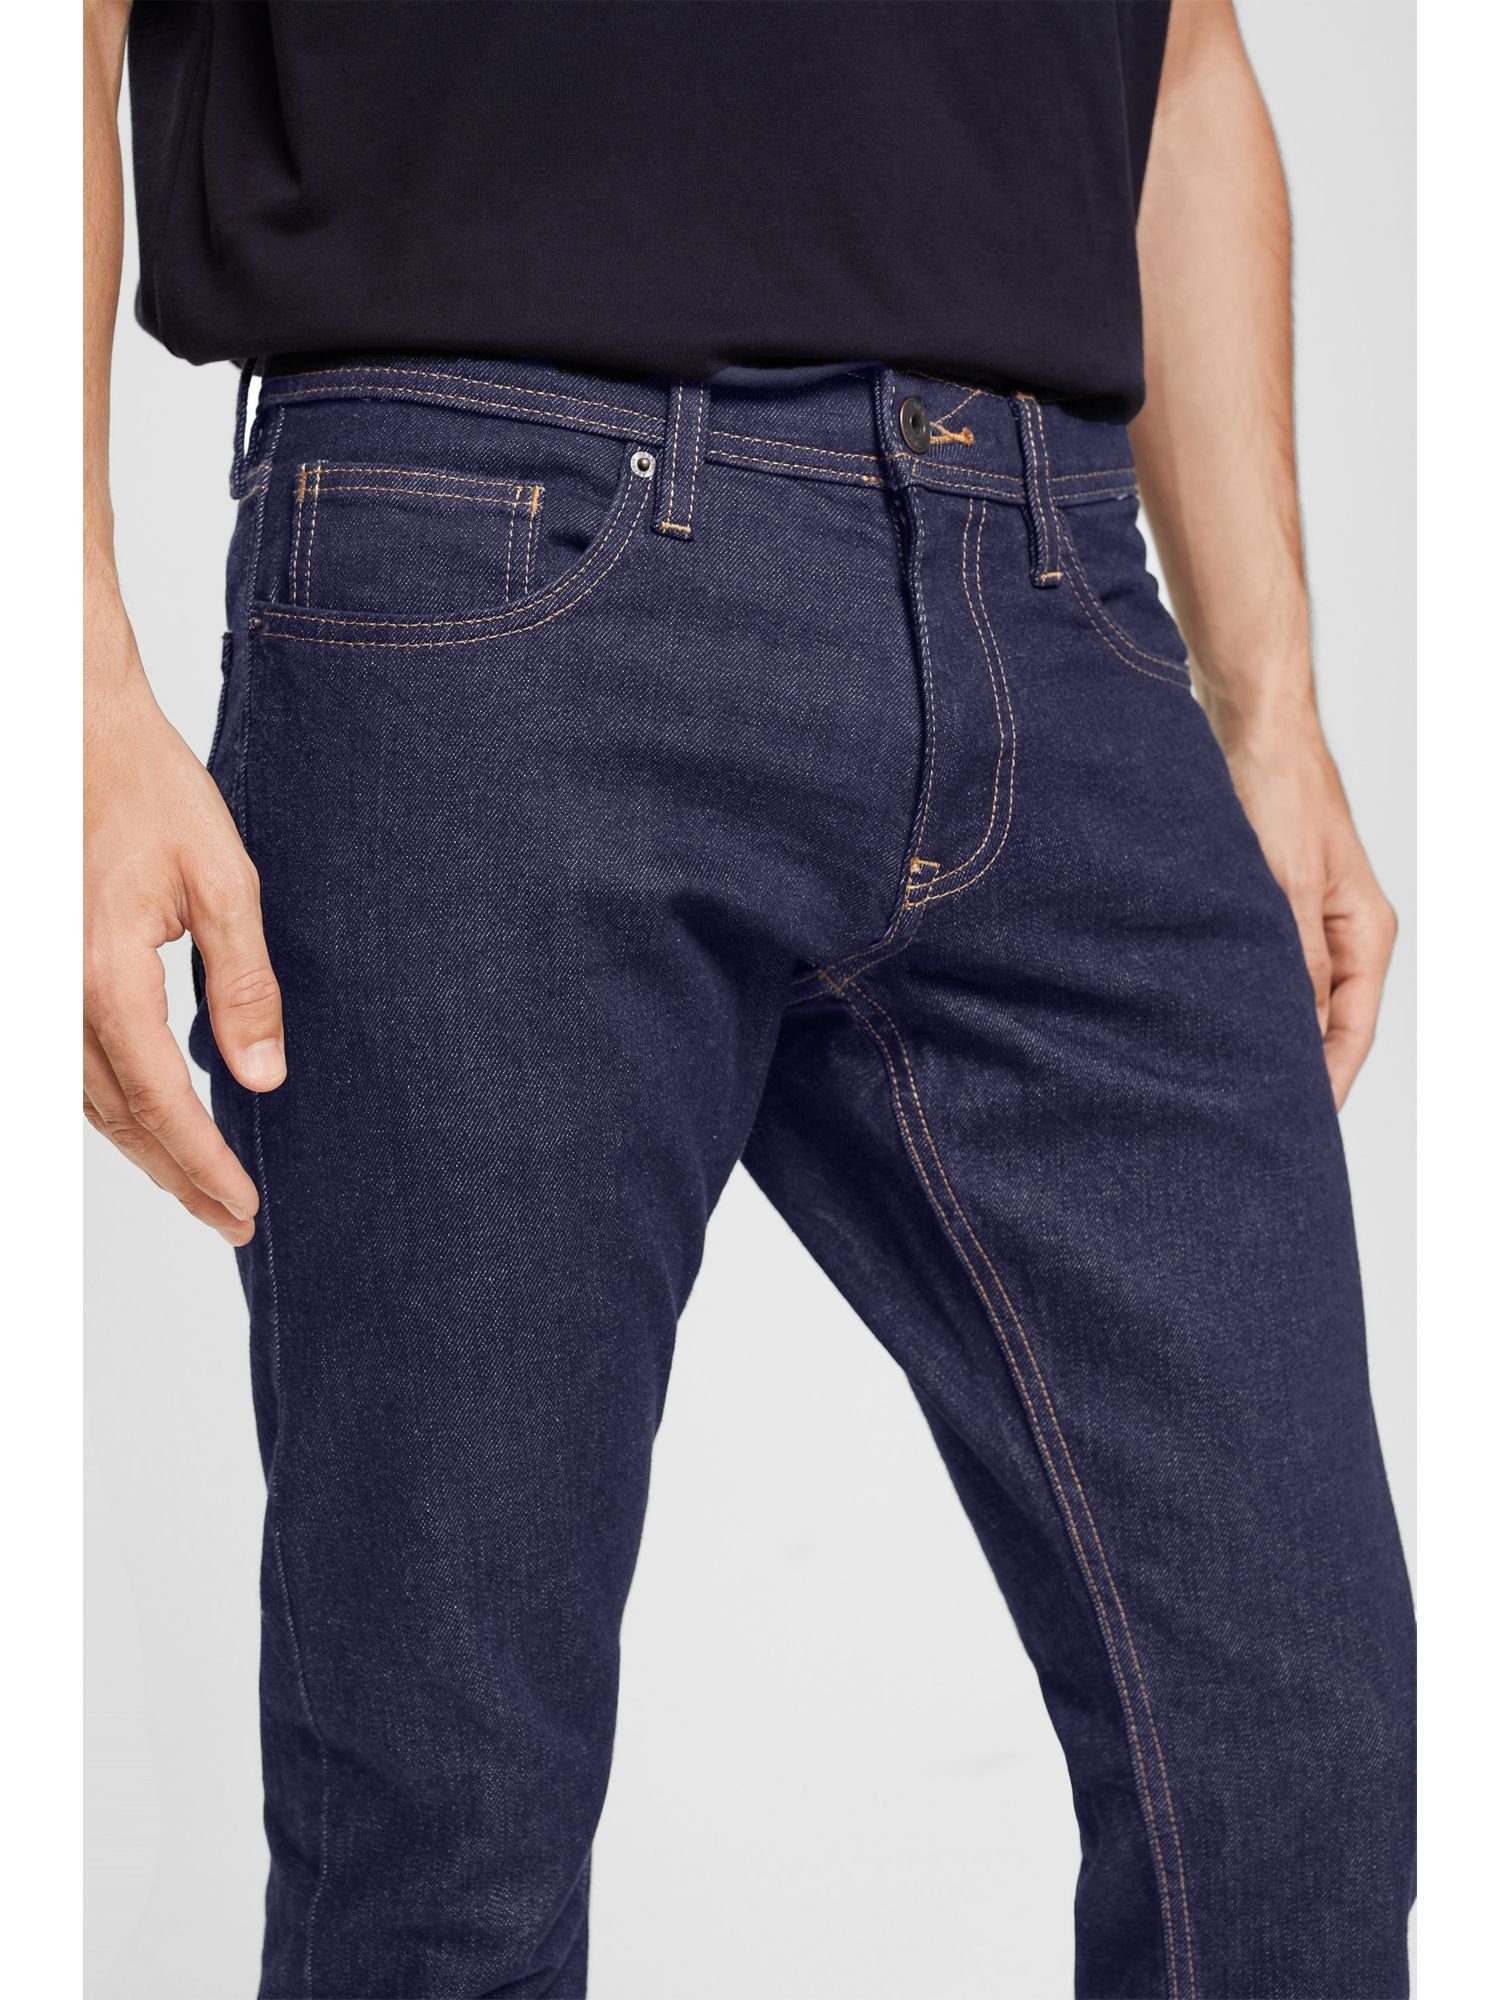 RINSE mit Slim-fit-Jeans Esprit Organic BLUE Stretch-Jeans Cotton